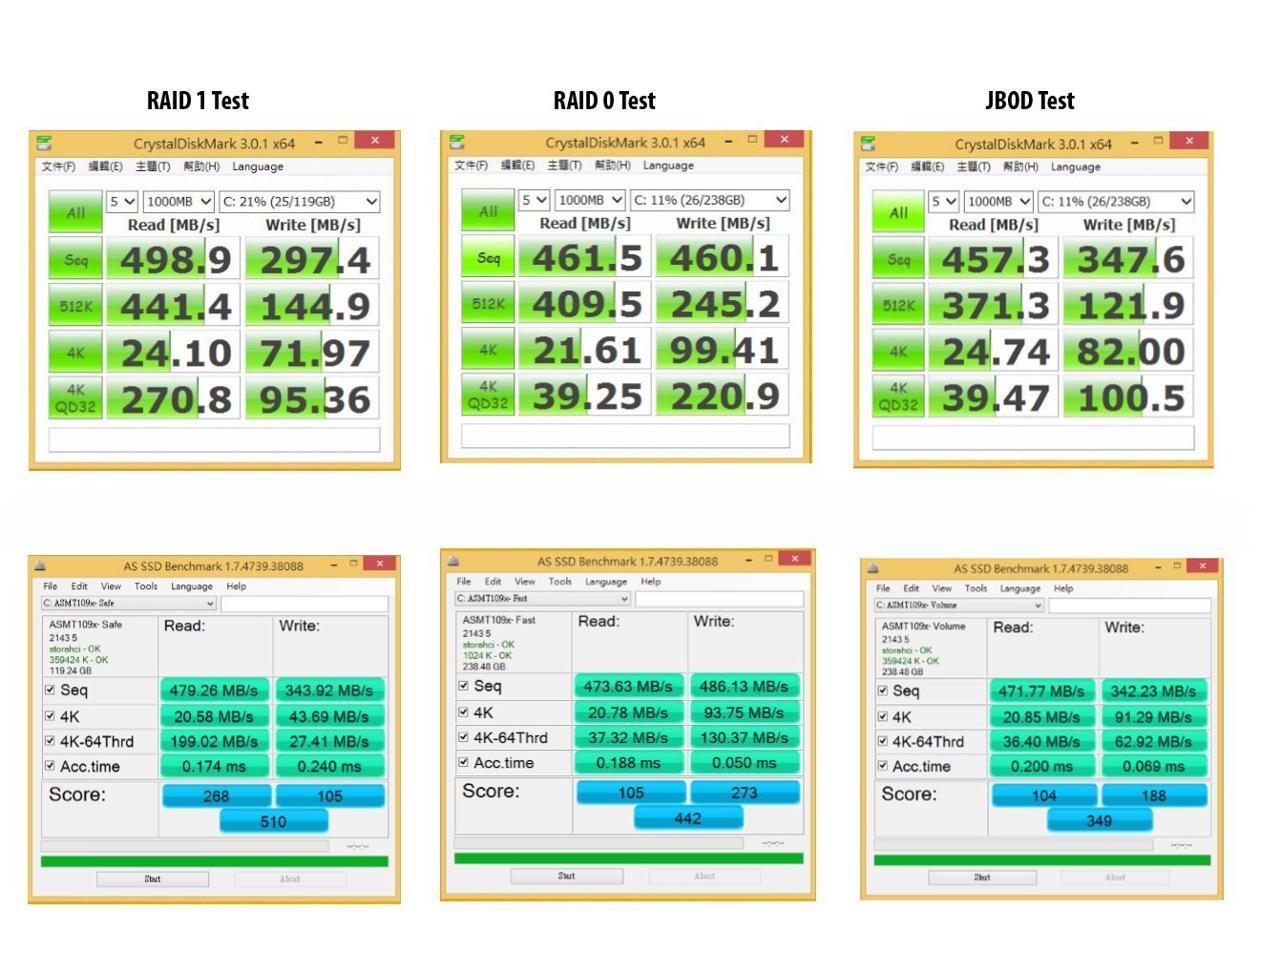 ZTC RAID Series mSATA Mini or Full Size to SATA III 2.5" Enclosure Board. Supports RAID 0 1 and JBOD at speed up to 520MB/s. Model ZTC-RAID001